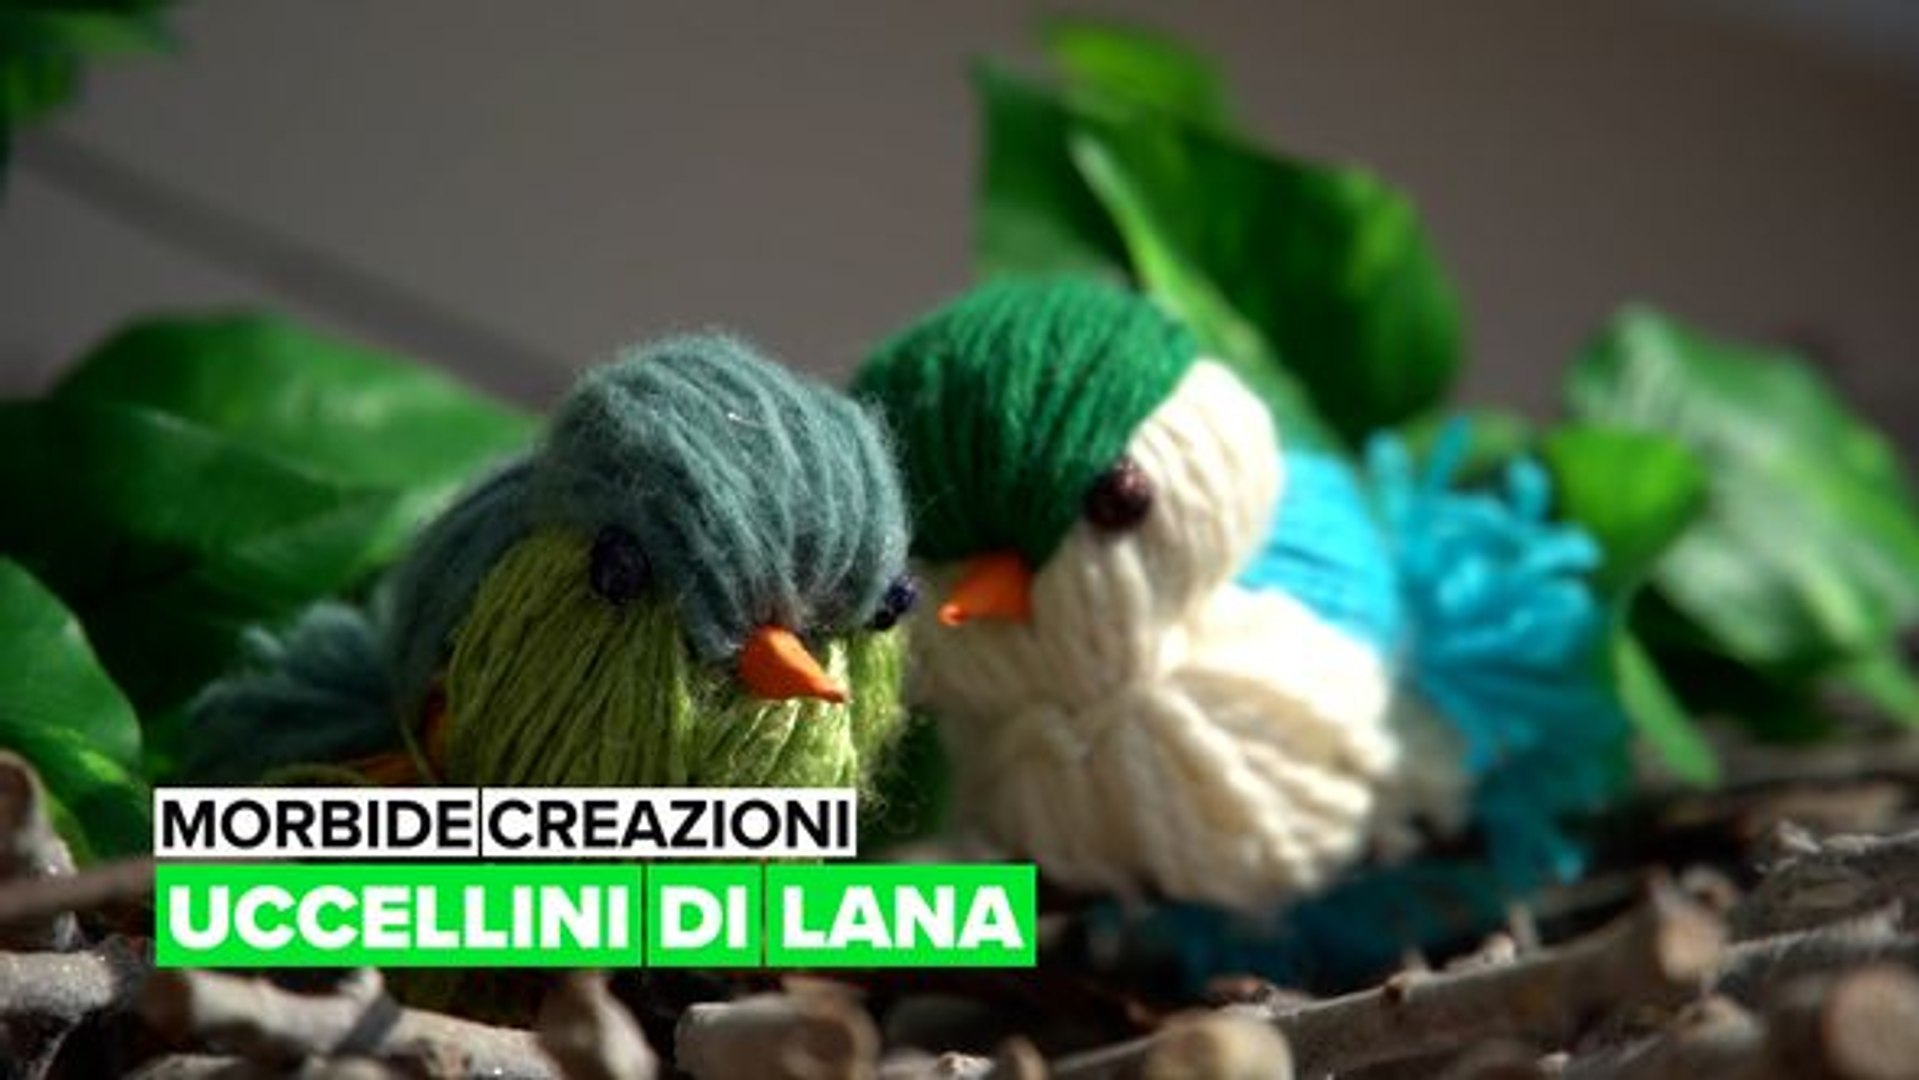 Morbide creazioni: Uccellini di lana - Video Dailymotion